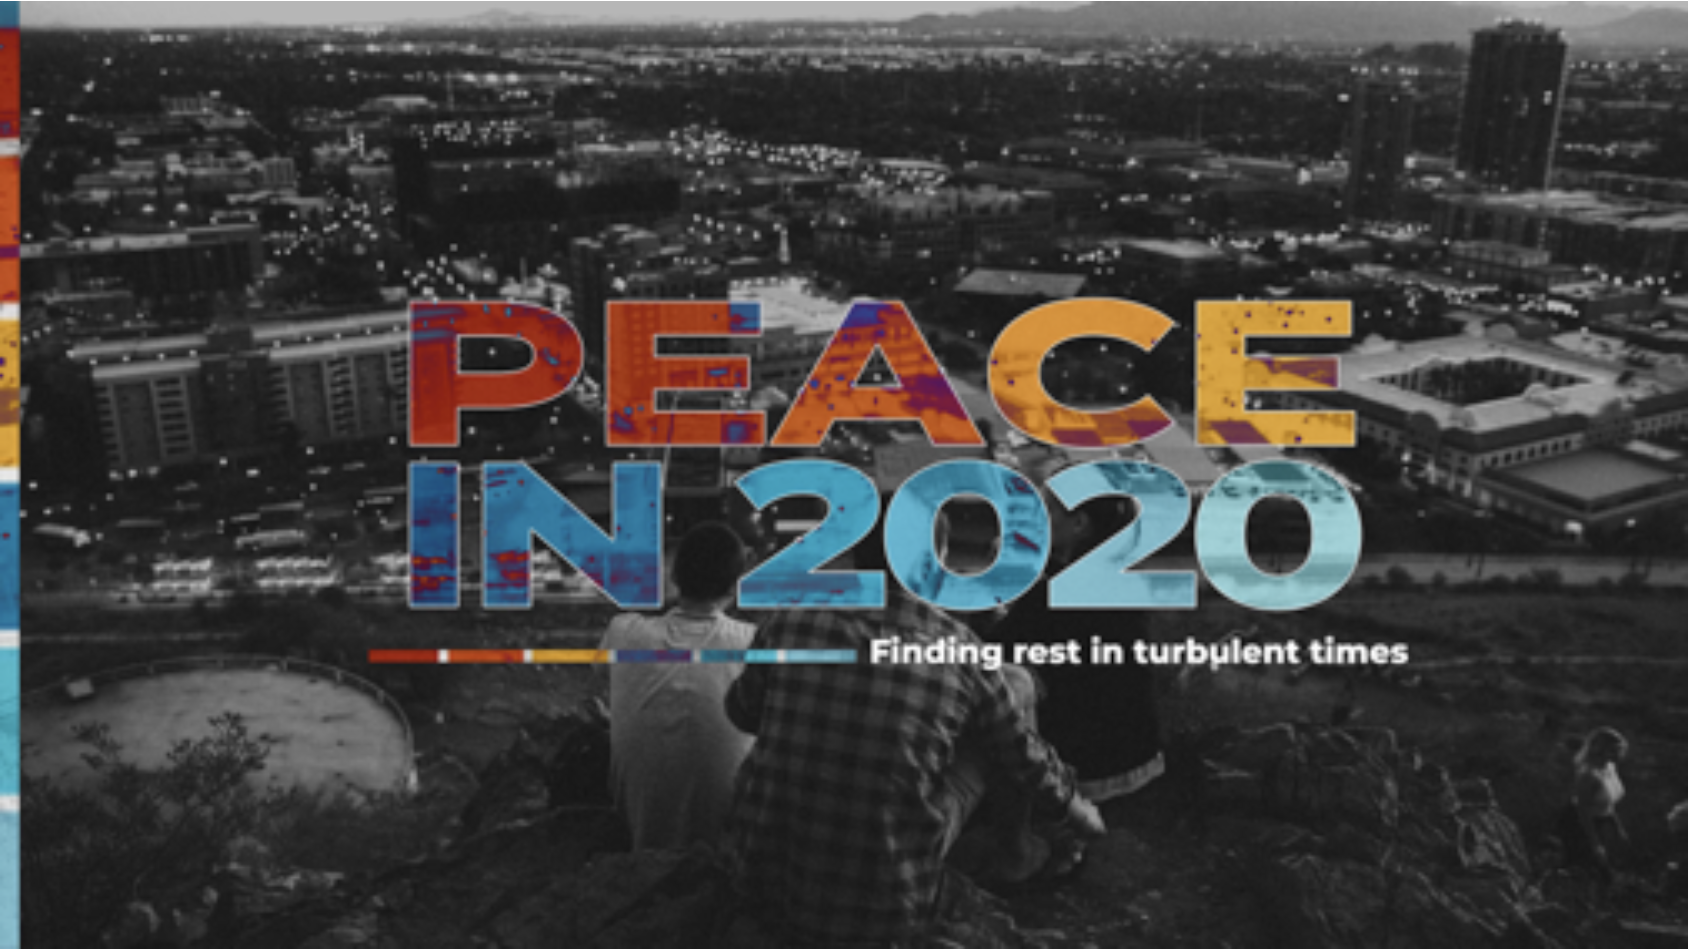 PEACE IN 2020